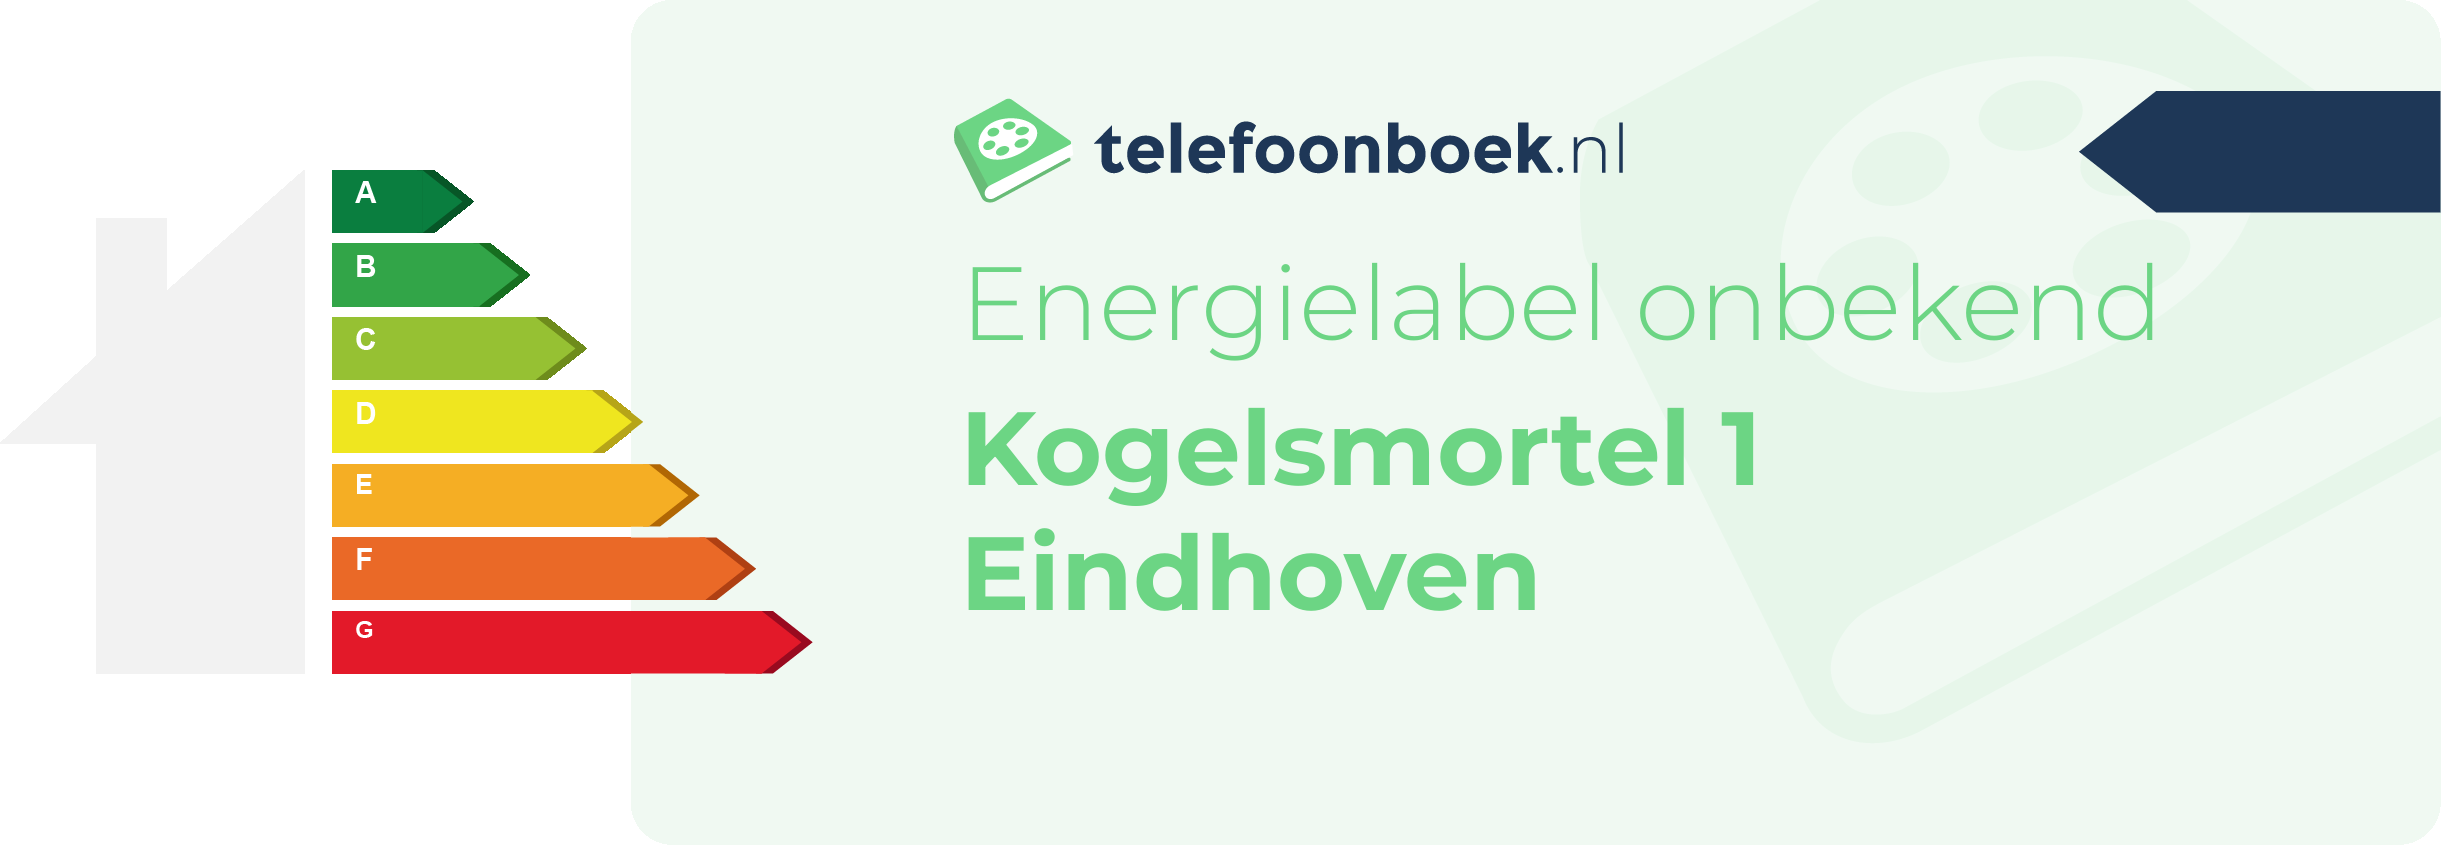 Energielabel Kogelsmortel 1 Eindhoven